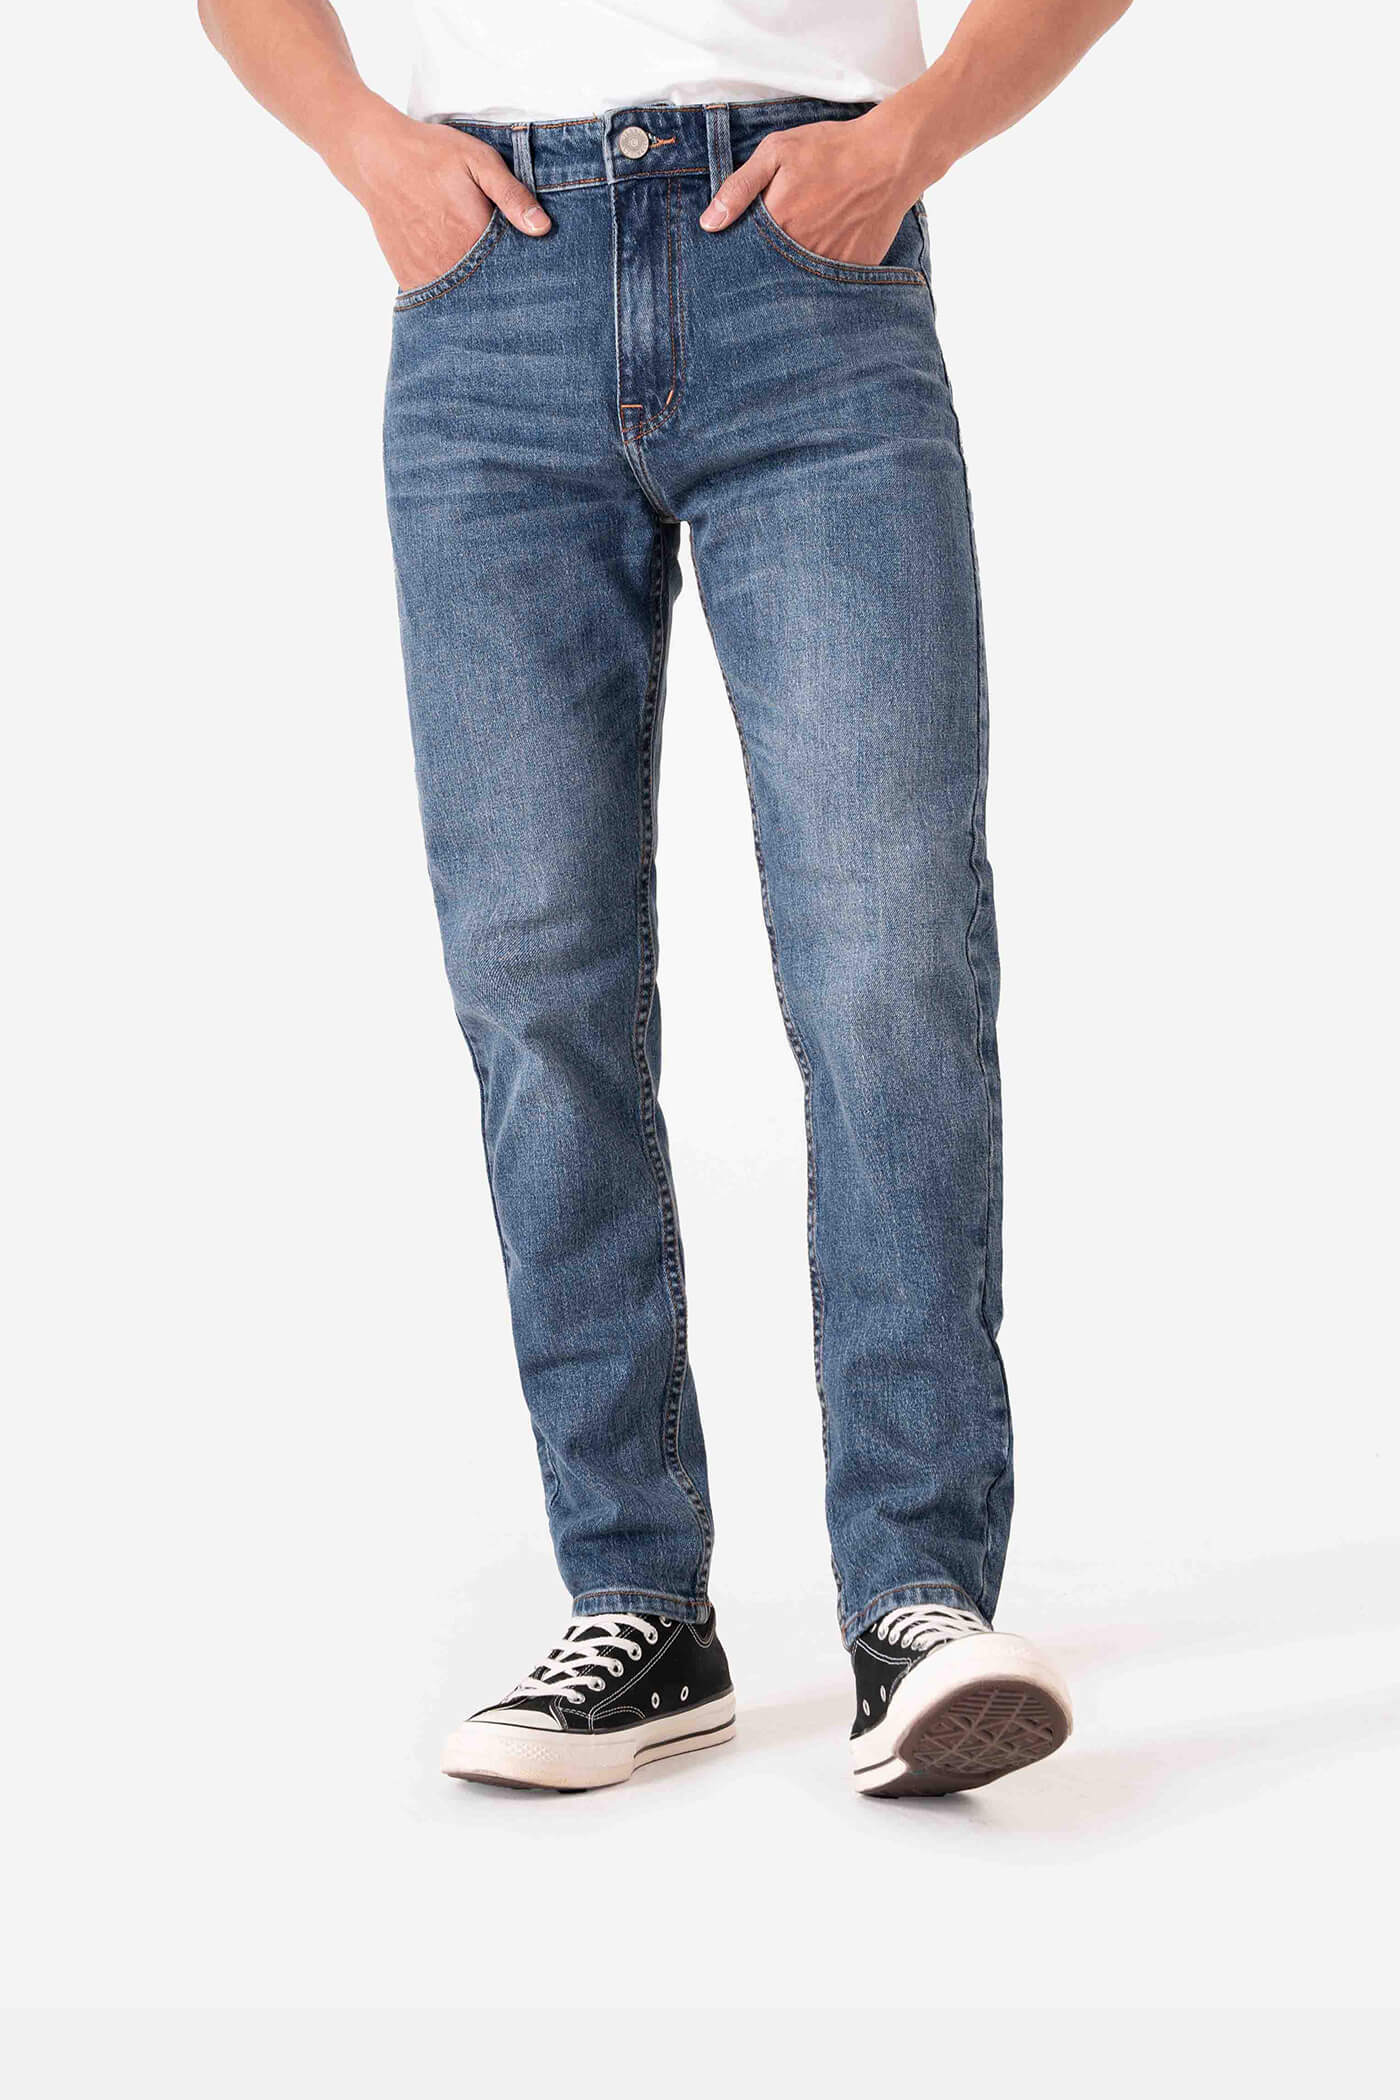 Quần Jeans Clean Denim dáng Slimfit  S3 xanh-nhat